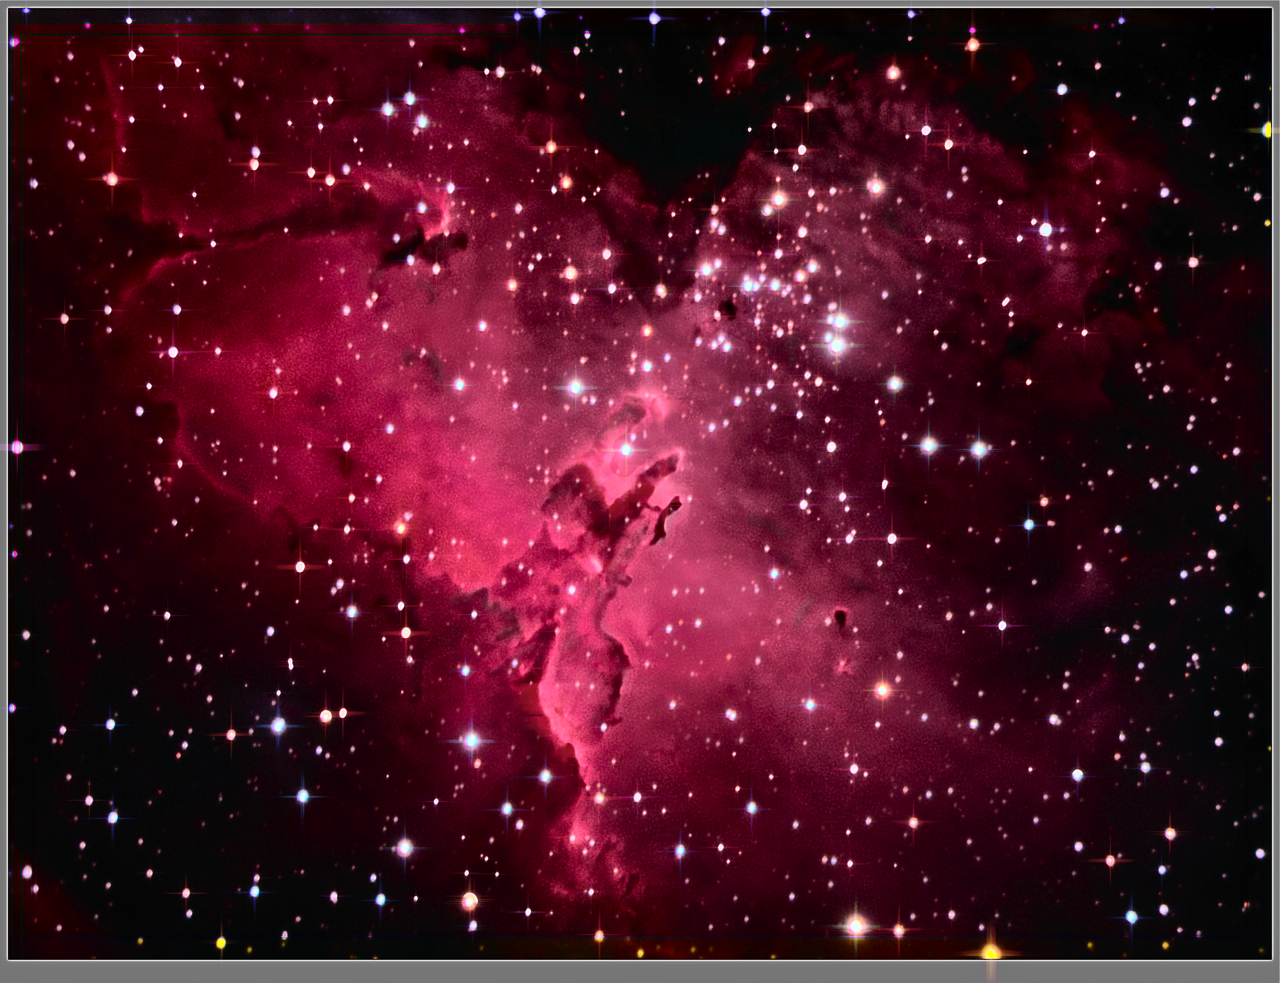 M-16s-Eagle Nebula